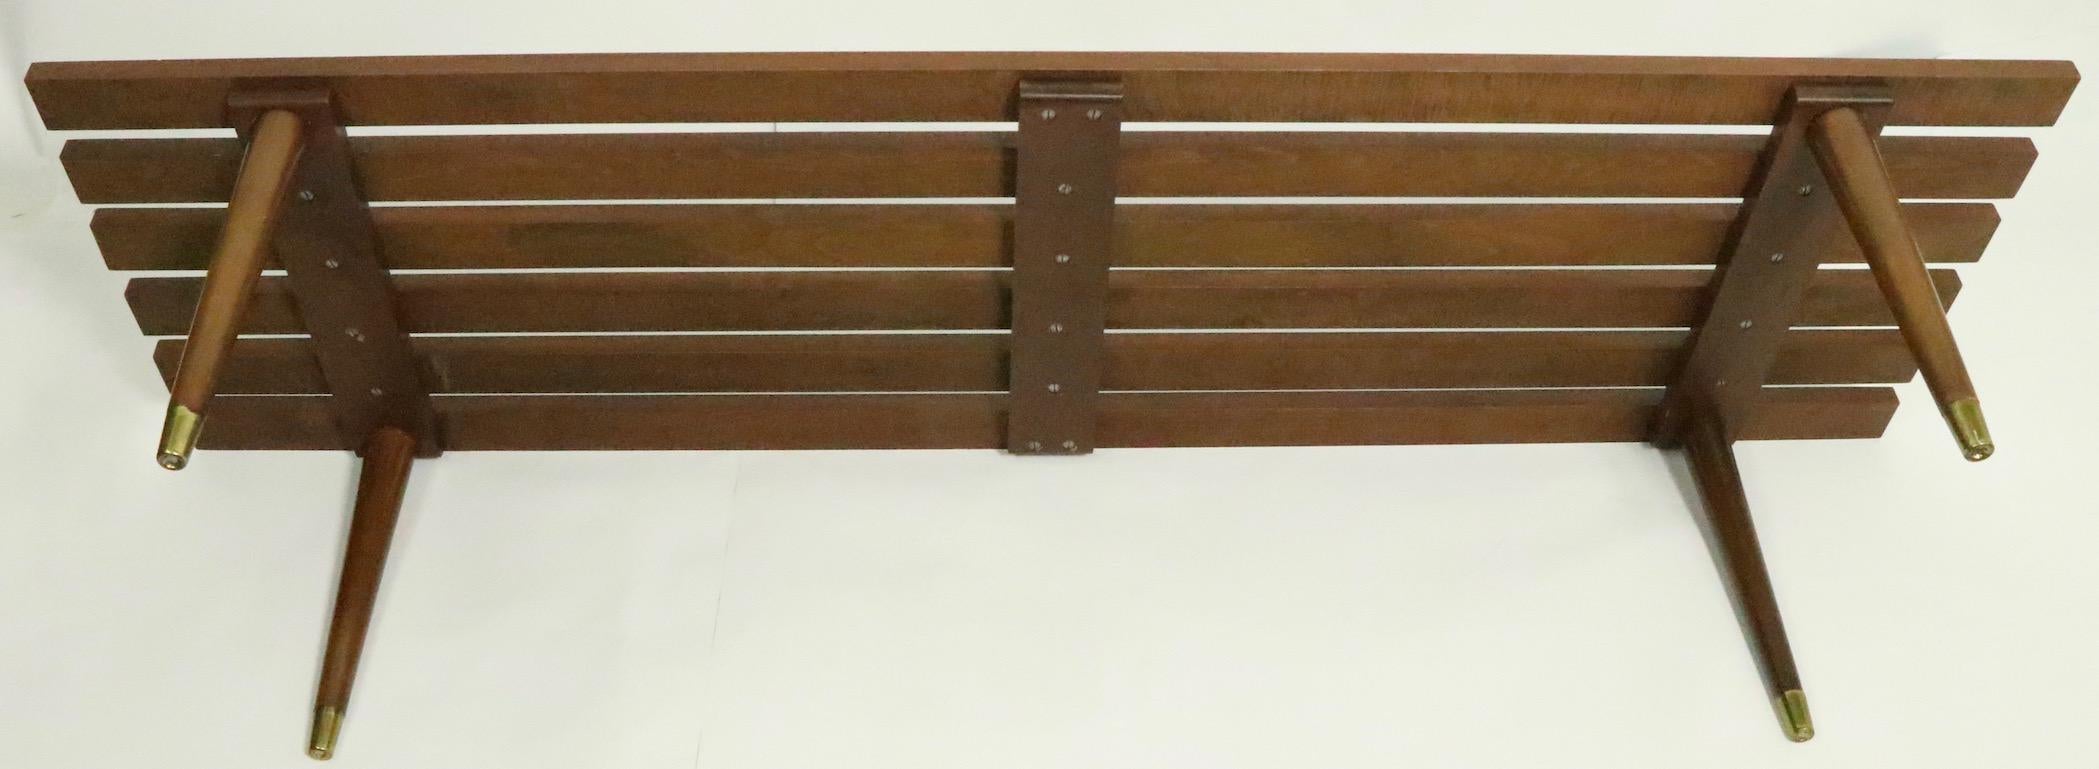 Wood Classic Mid Century Slat Bench Table